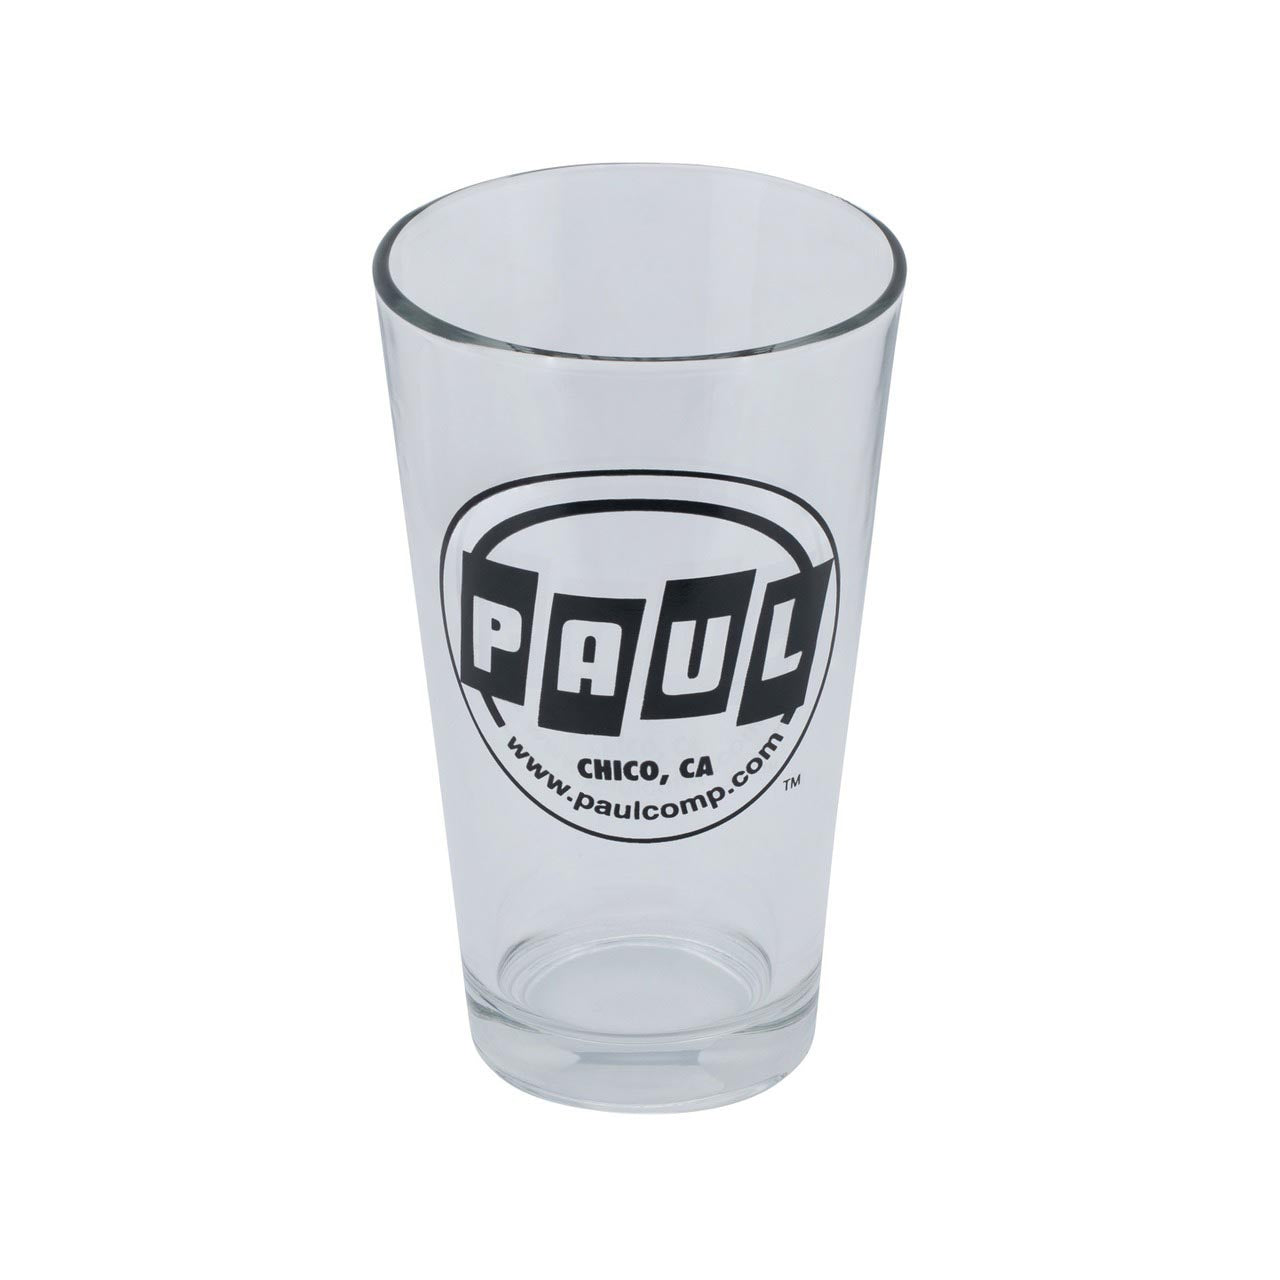 PAUL COMPONENT Logo Pint Glass